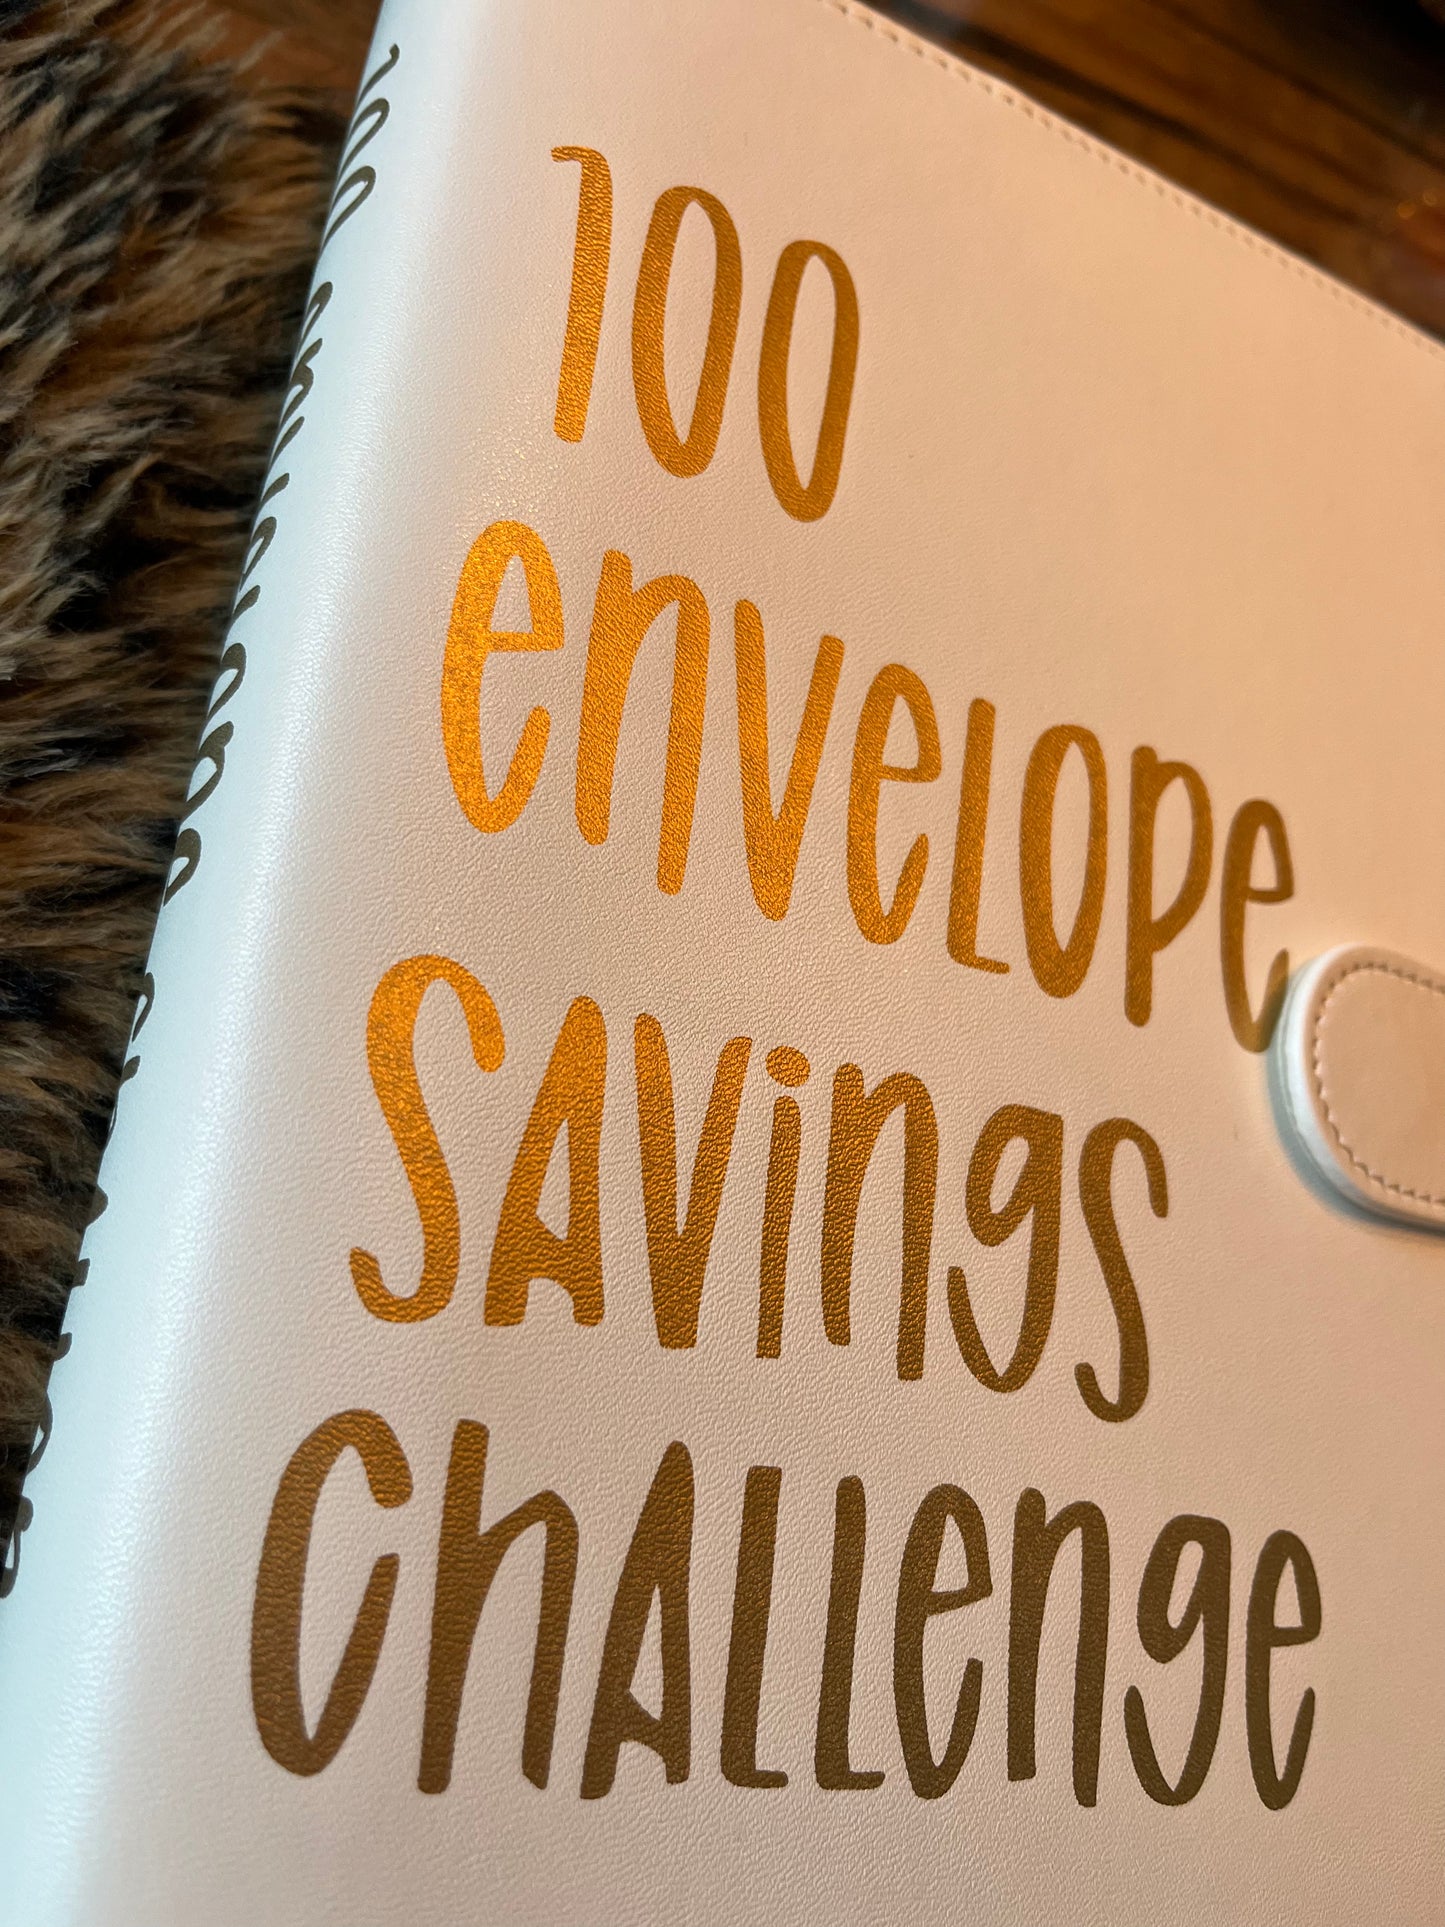 100 enveloppe challenge wit goud